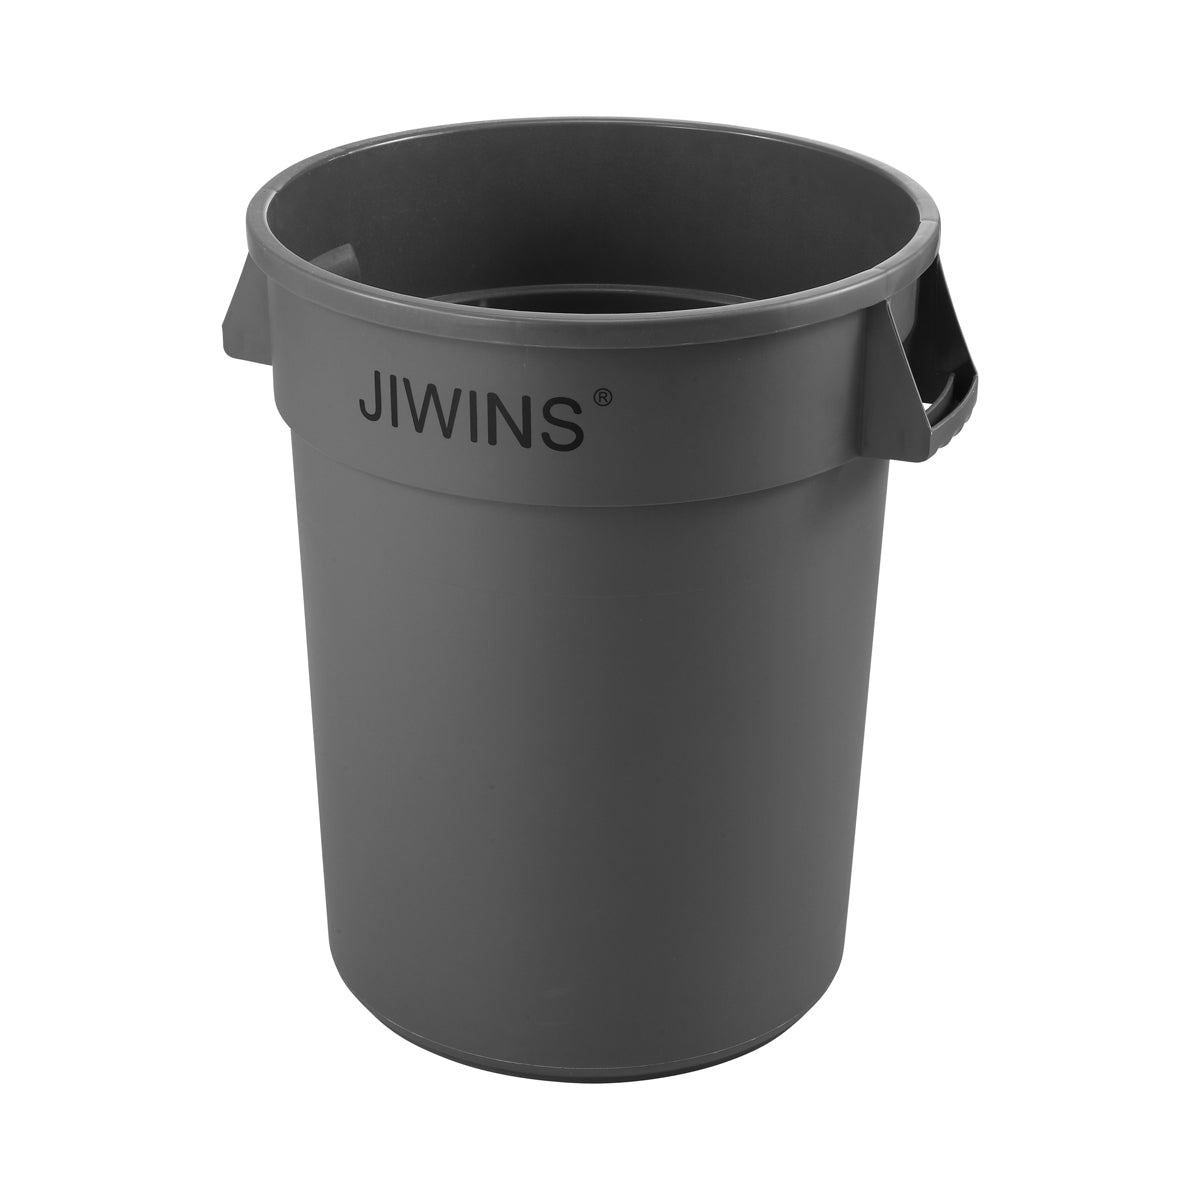 JW-CR210E Jiwins Round Recycling Bin Grey 208Lt Tomkin Australia Hospitality Supplies